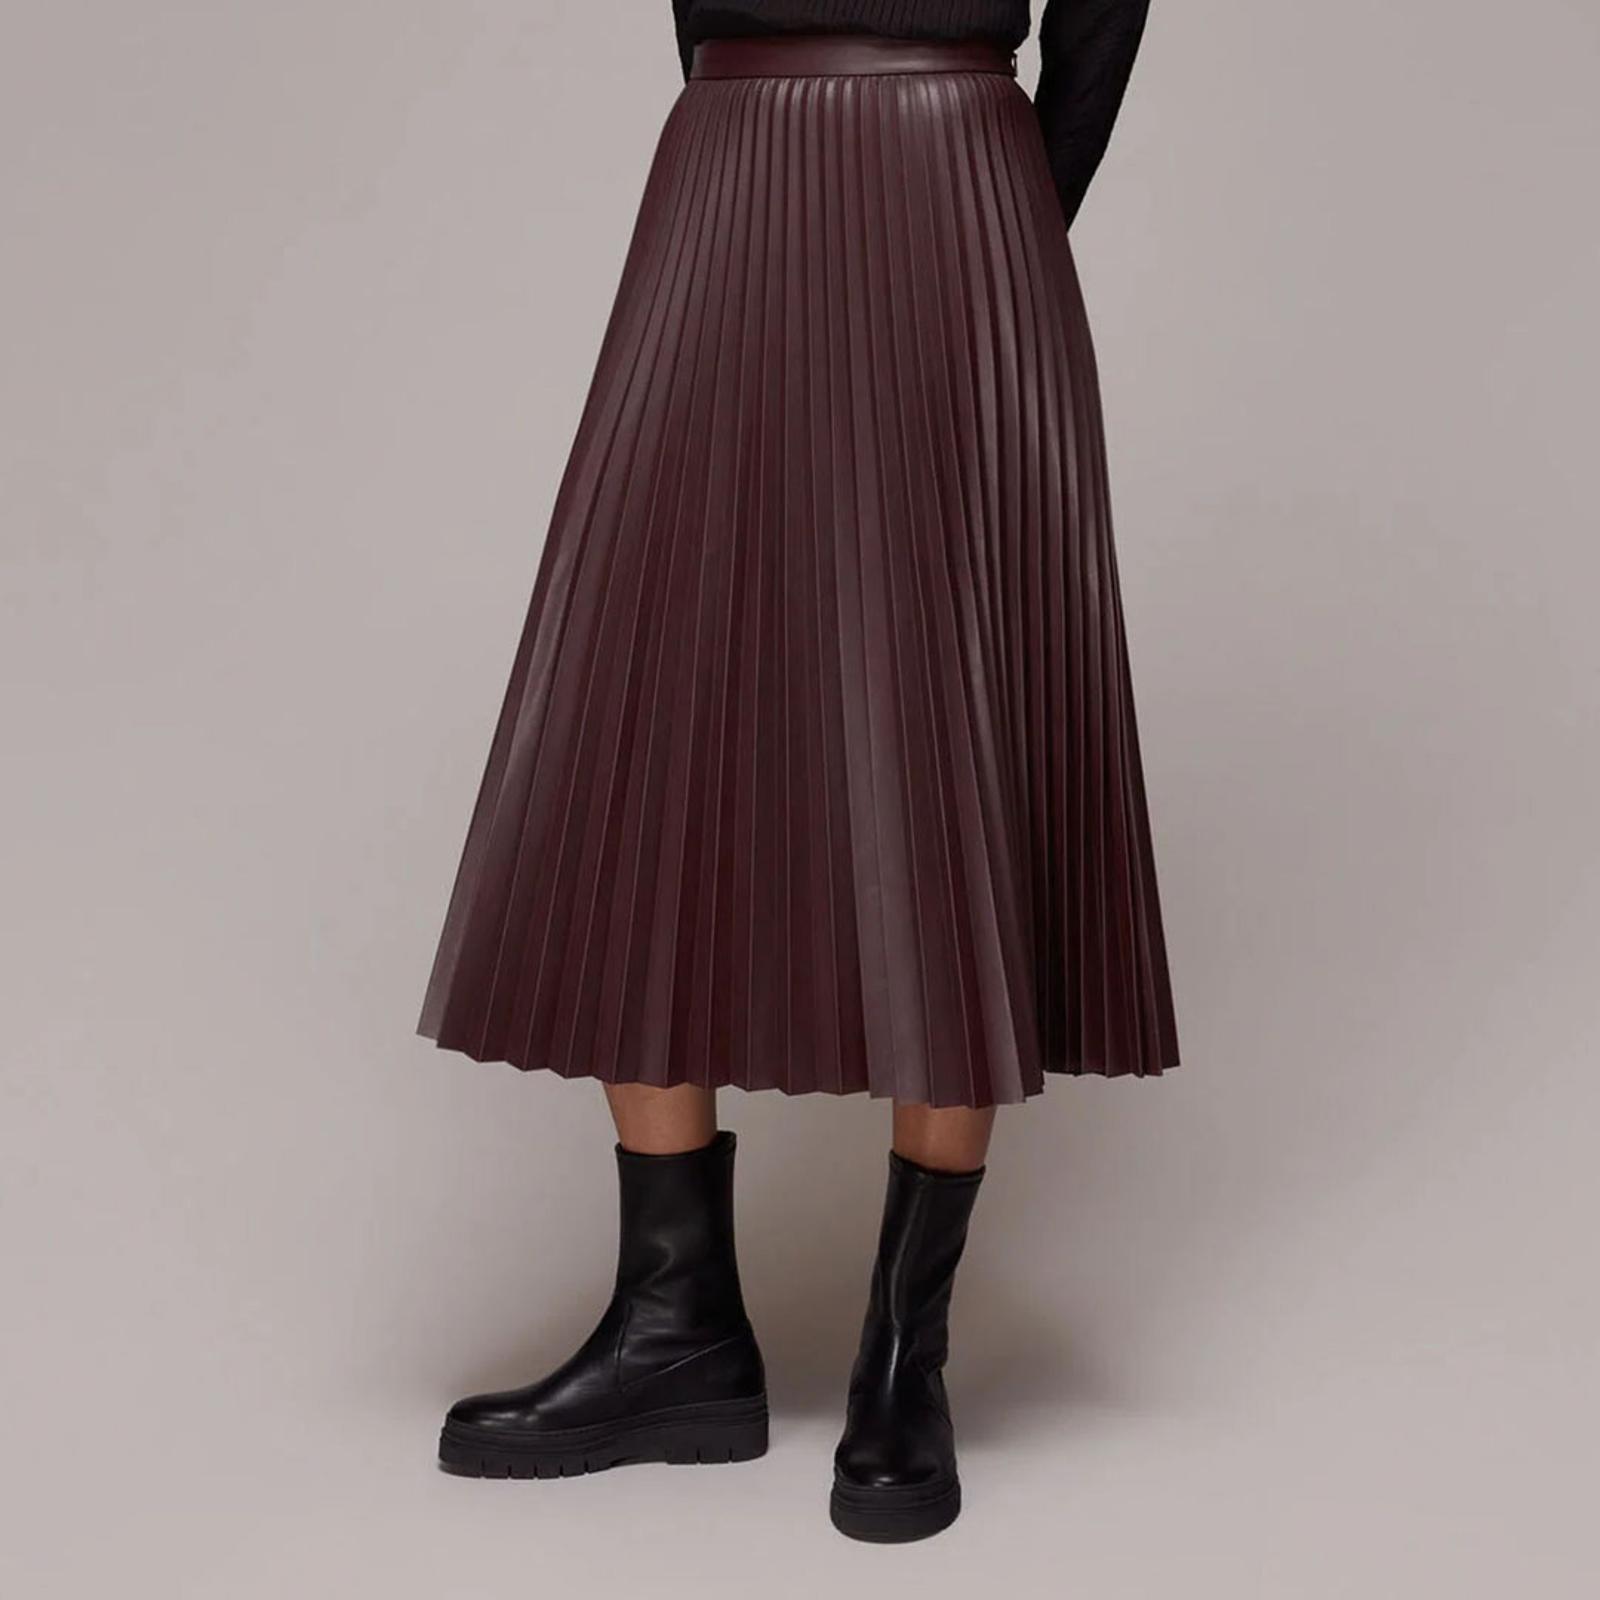 Chocolate Pleated PU Leather Skirt - BrandAlley